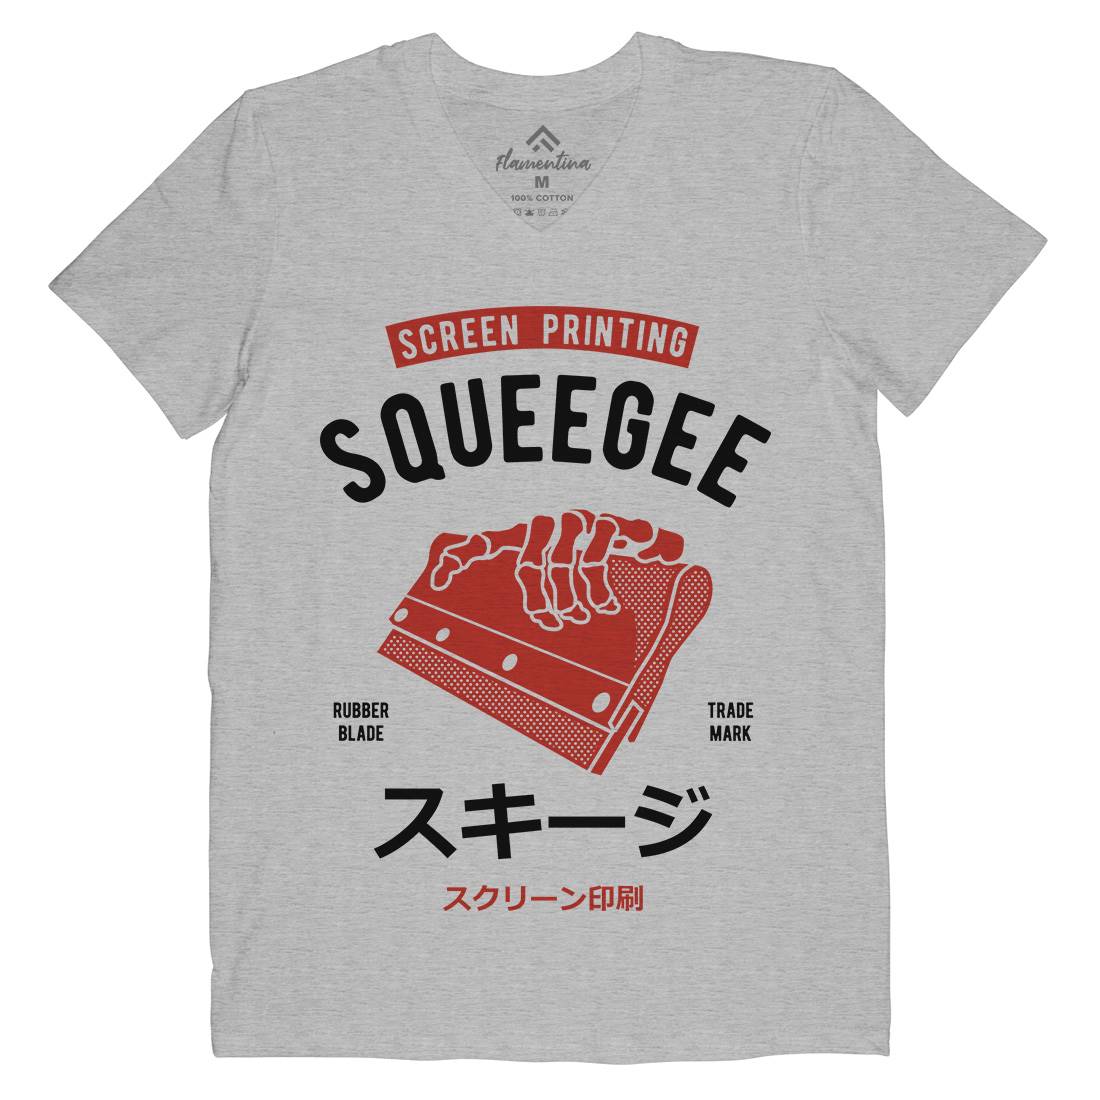 Squeegee Social Club Mens Organic V-Neck T-Shirt Work A282